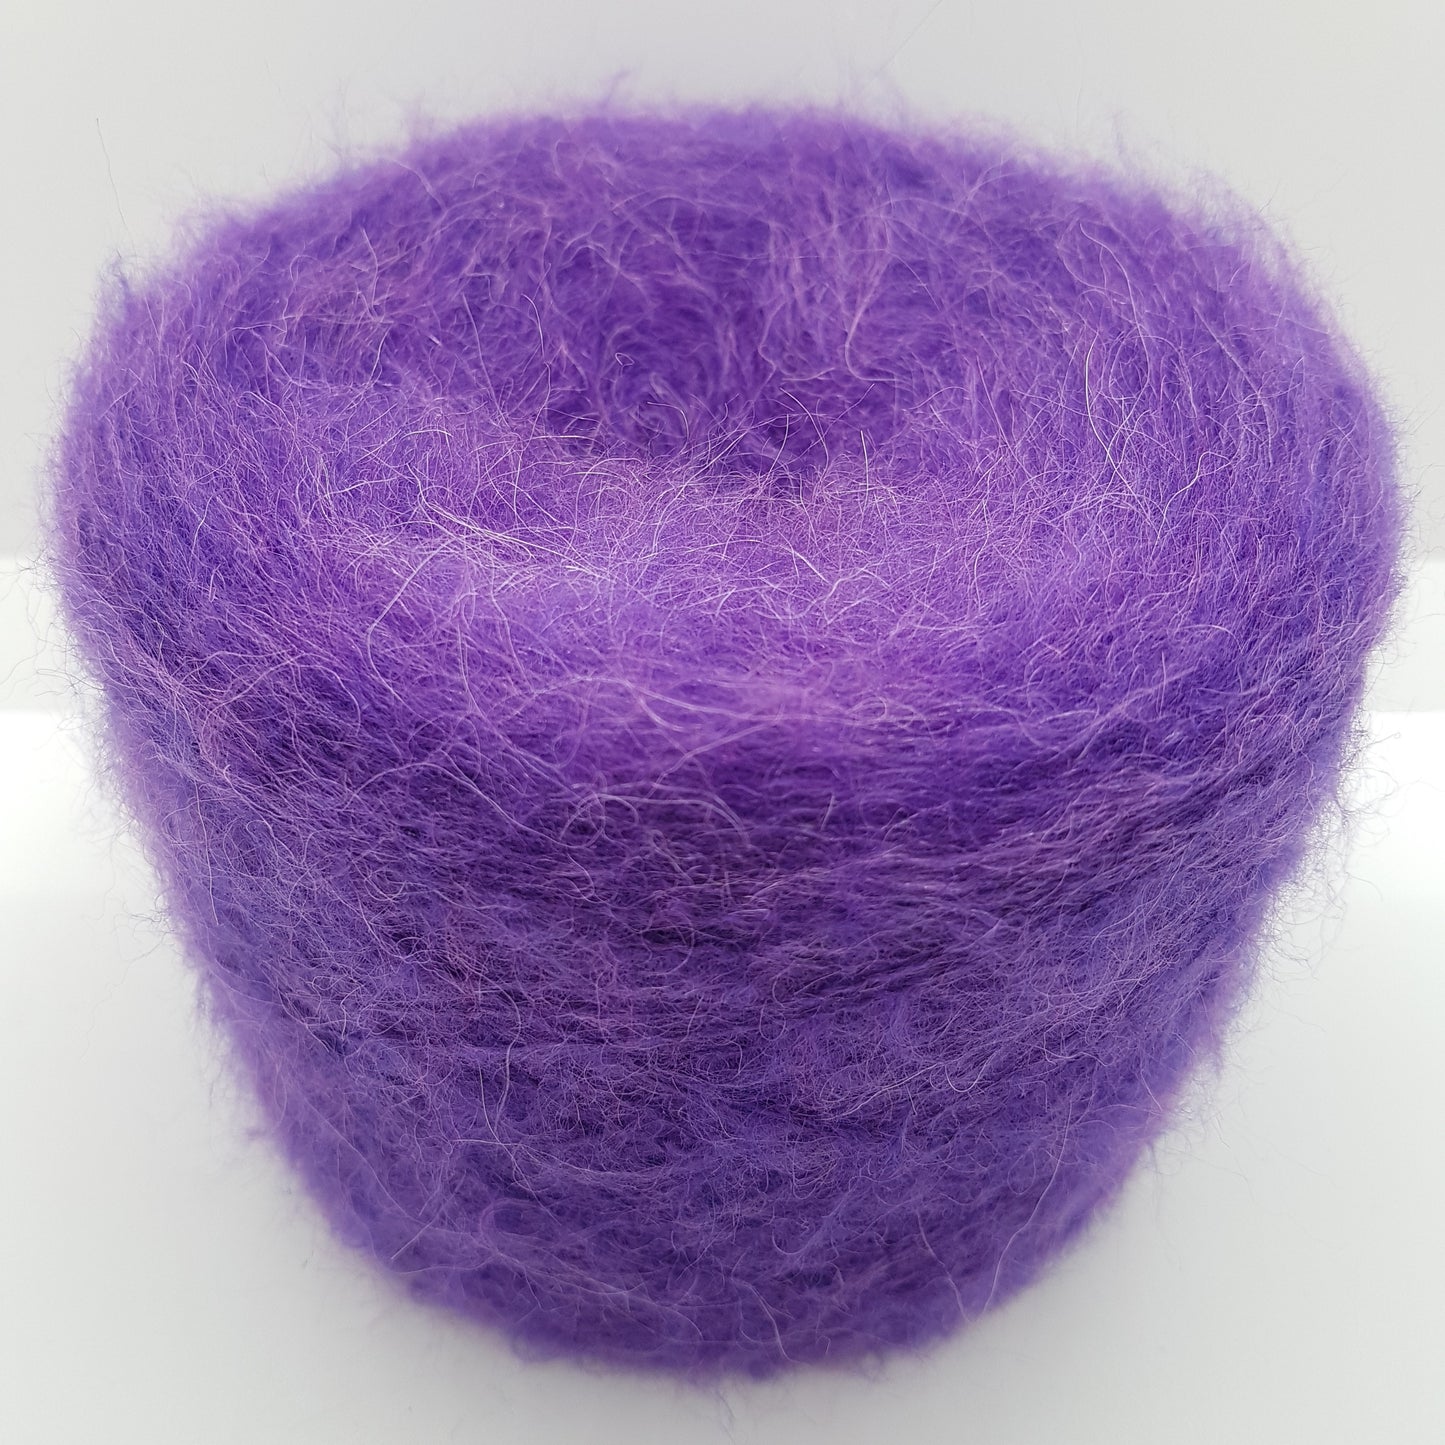 100g Alpaca Alpaca combed brushed soft Italian yarn purple color N.225